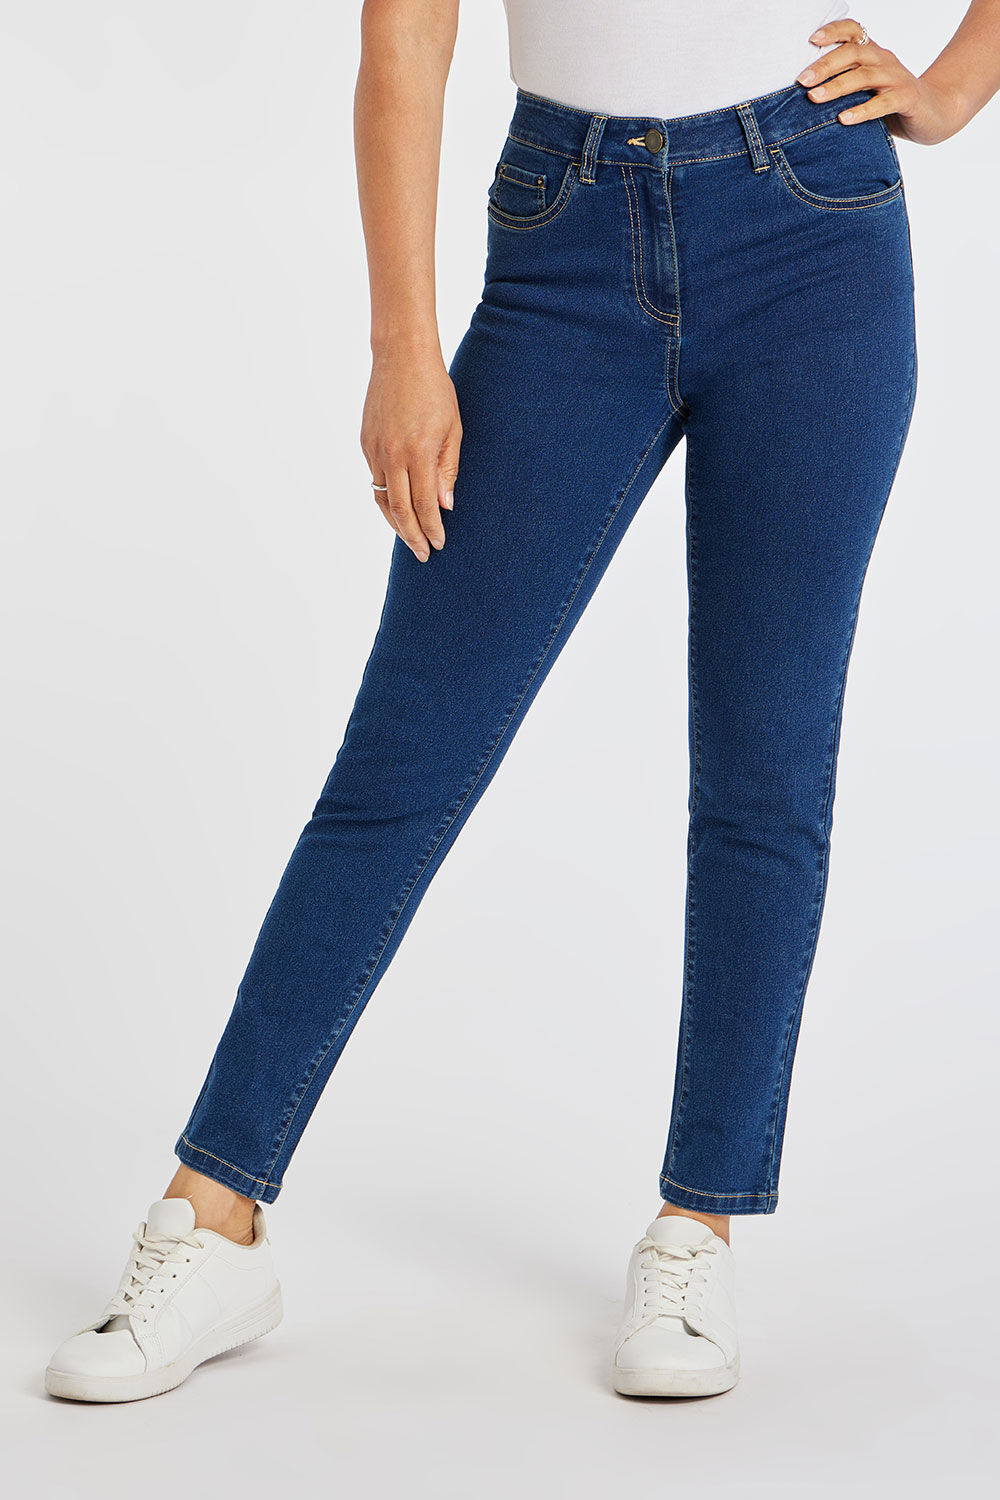 Bonmarche Denim The Susie Slim Leg Jeans, Size: 26